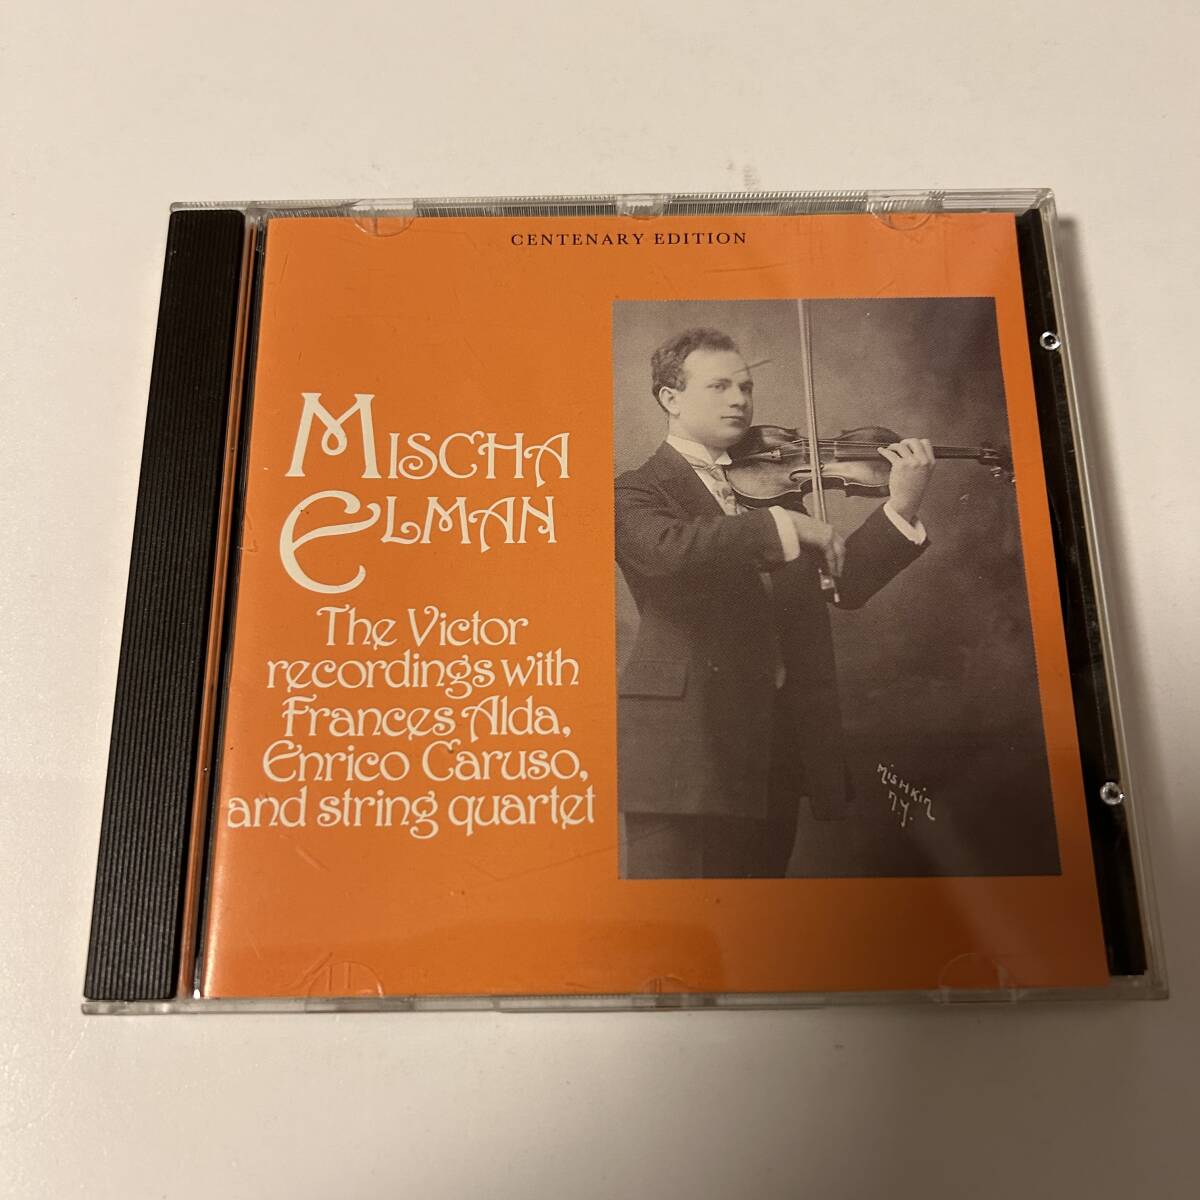 ##mi автомобиль *e Ла Манш MISCHA ELMAN / The Victor recordings with Frances Alda.Enrico Caruso.and string quartet Biddulph##